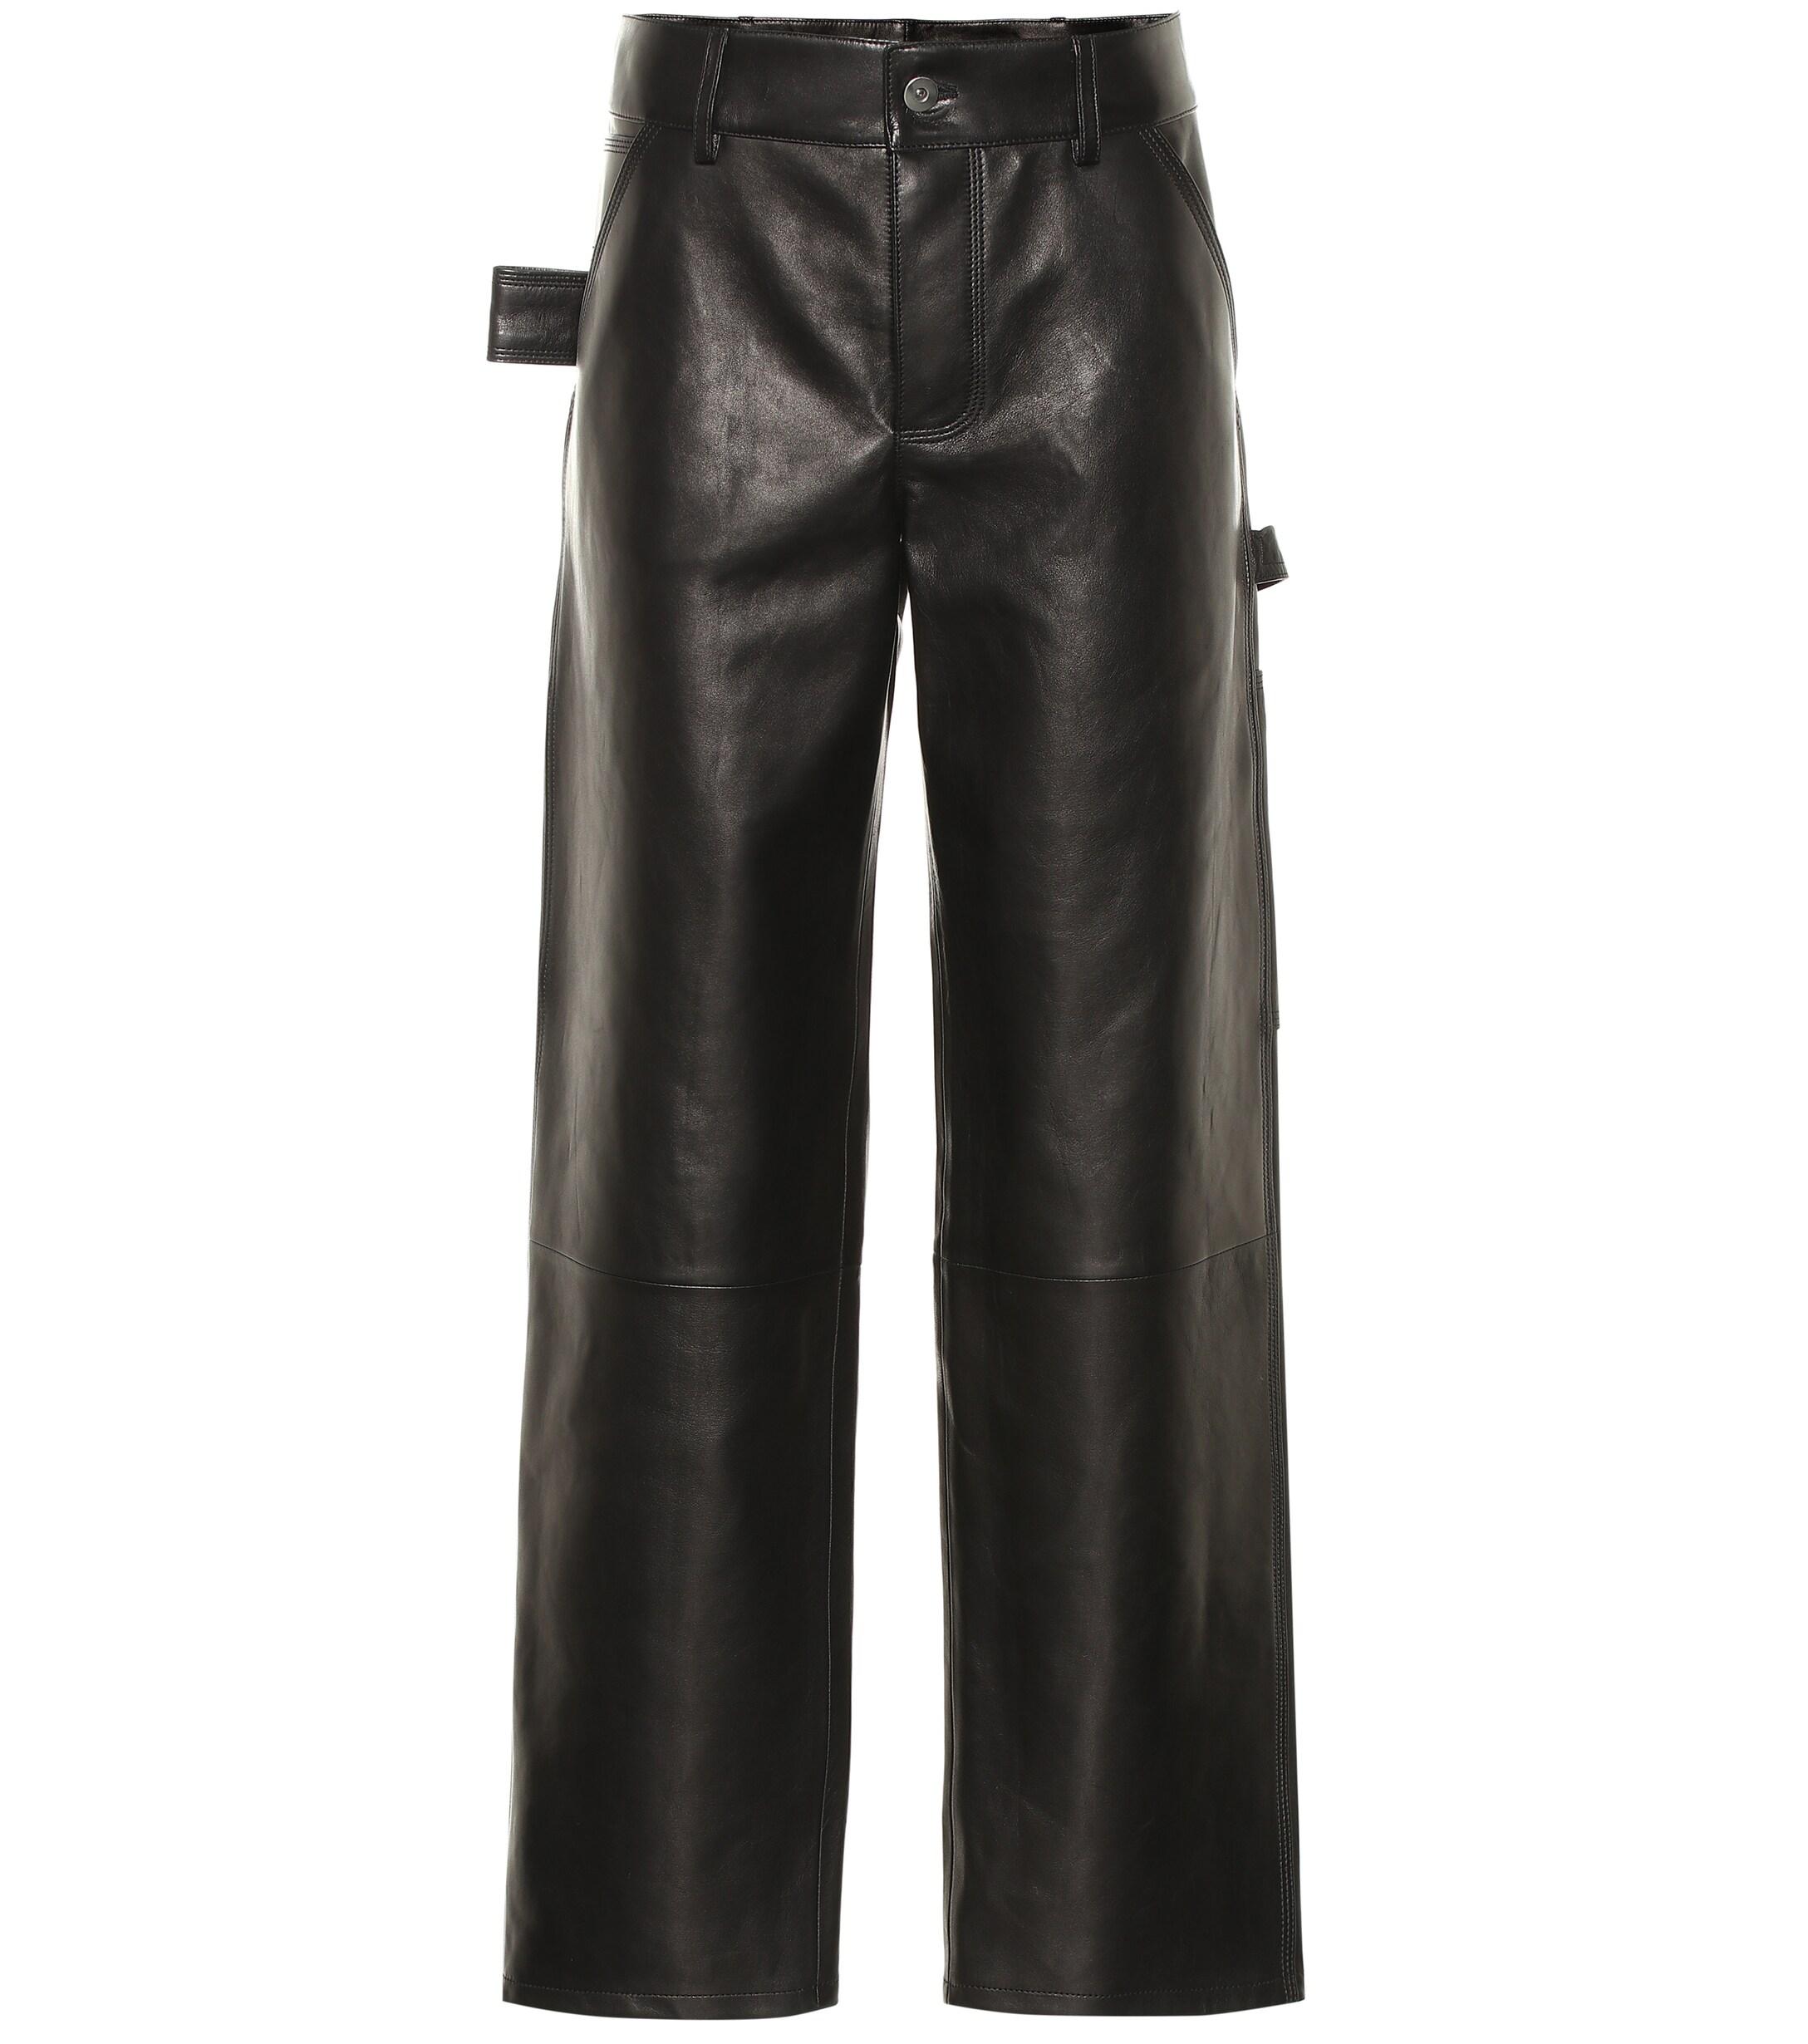 Bottega Veneta Leather Pants in Black - Lyst